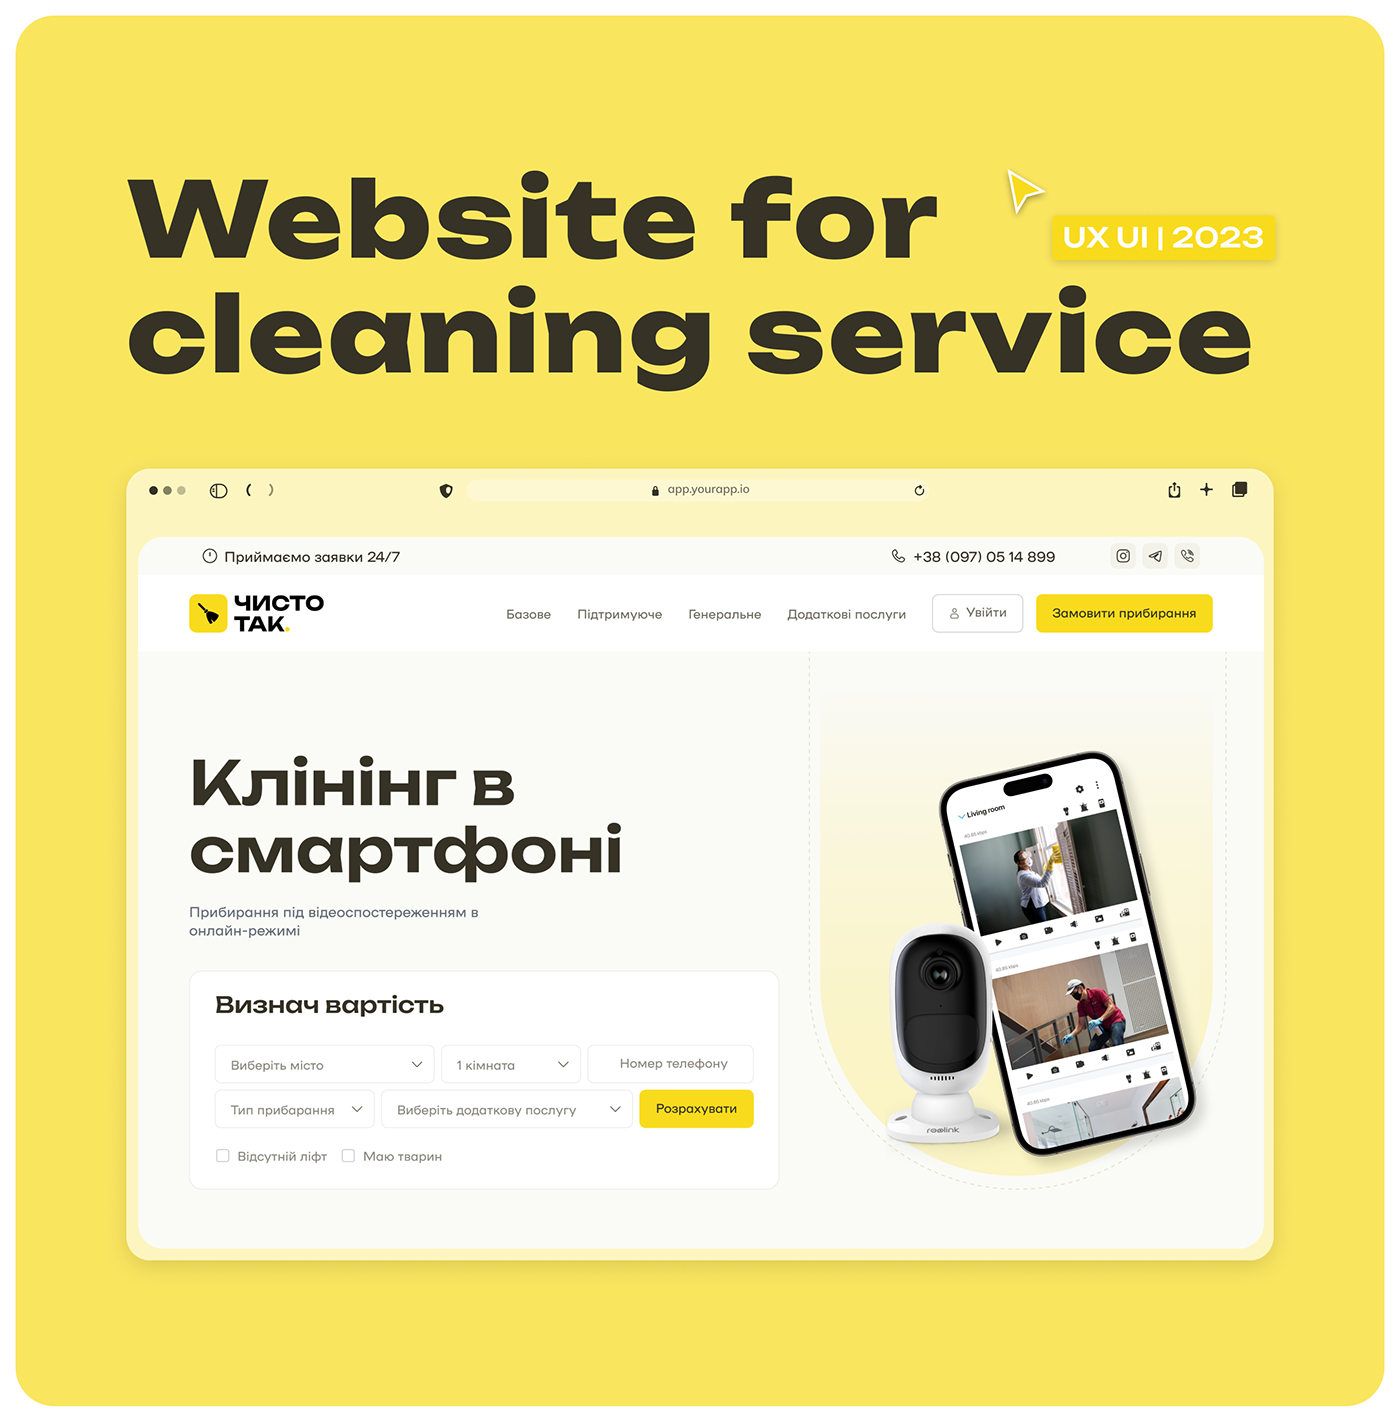 Webdesign moderndesign Service Website promotion website calculator design #cleaning service design brightdesign cleanui colorful landing